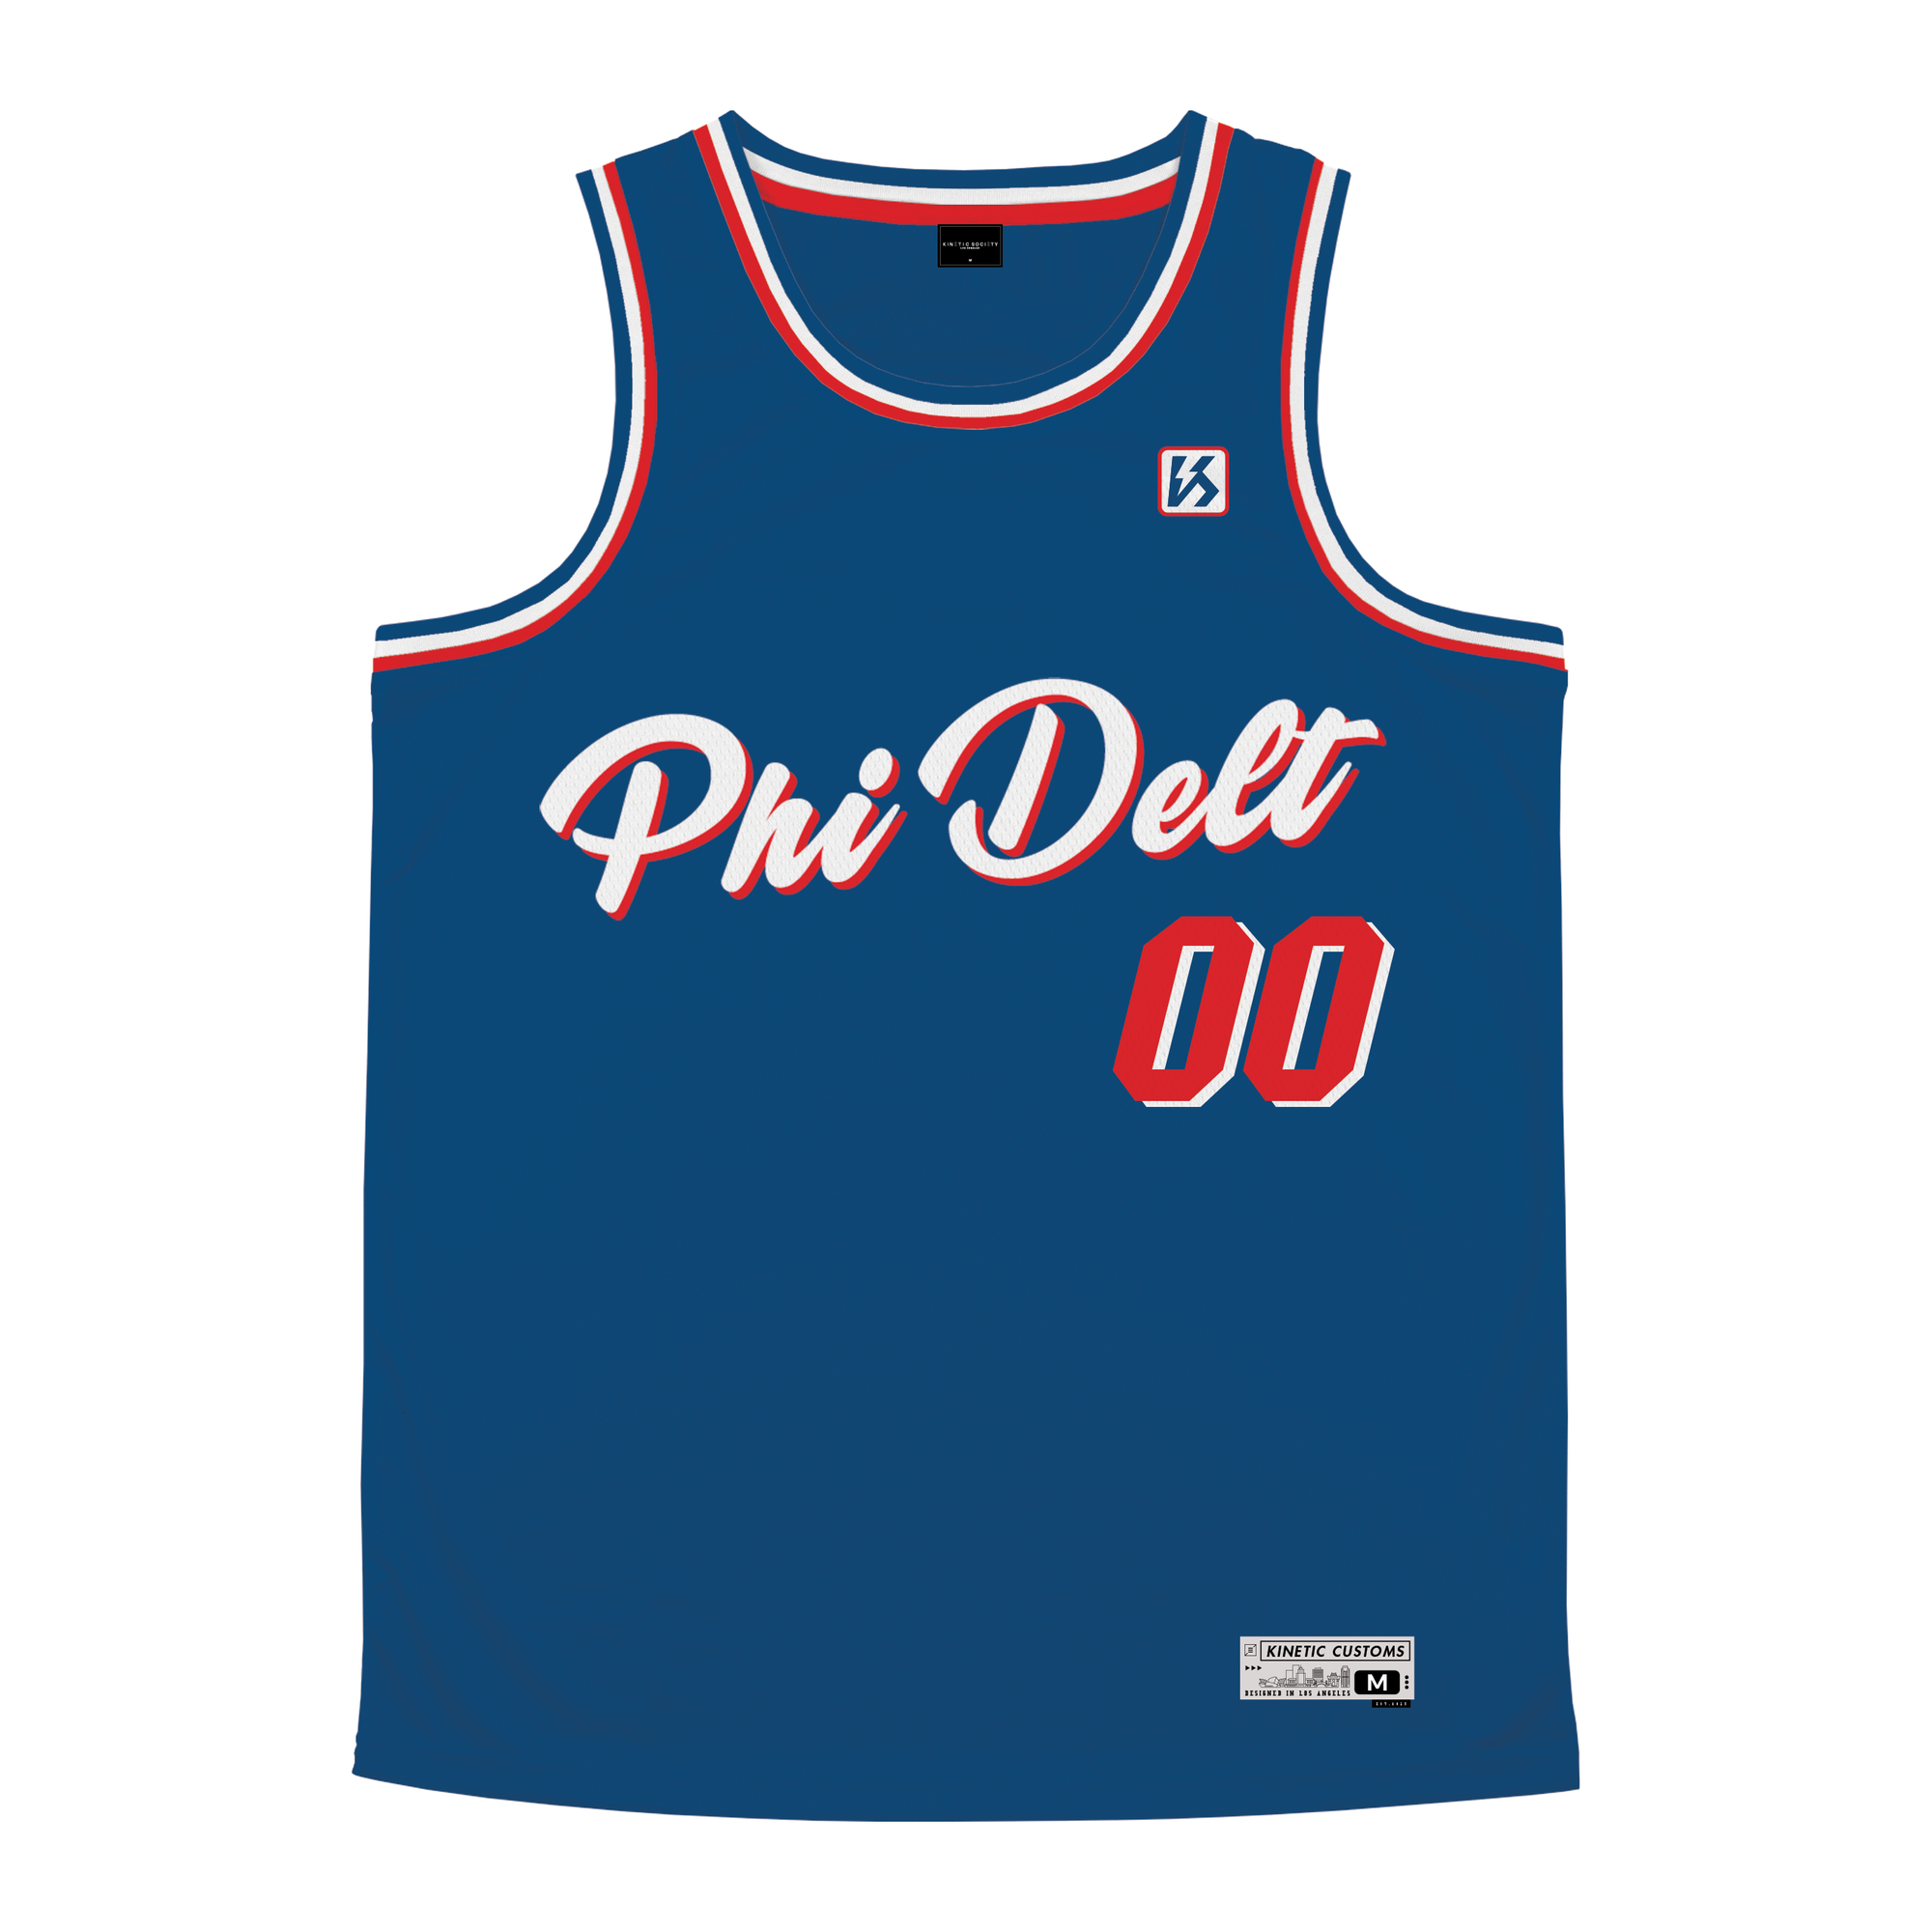 Phi Delta Theta - The Dream Basketball Jersey